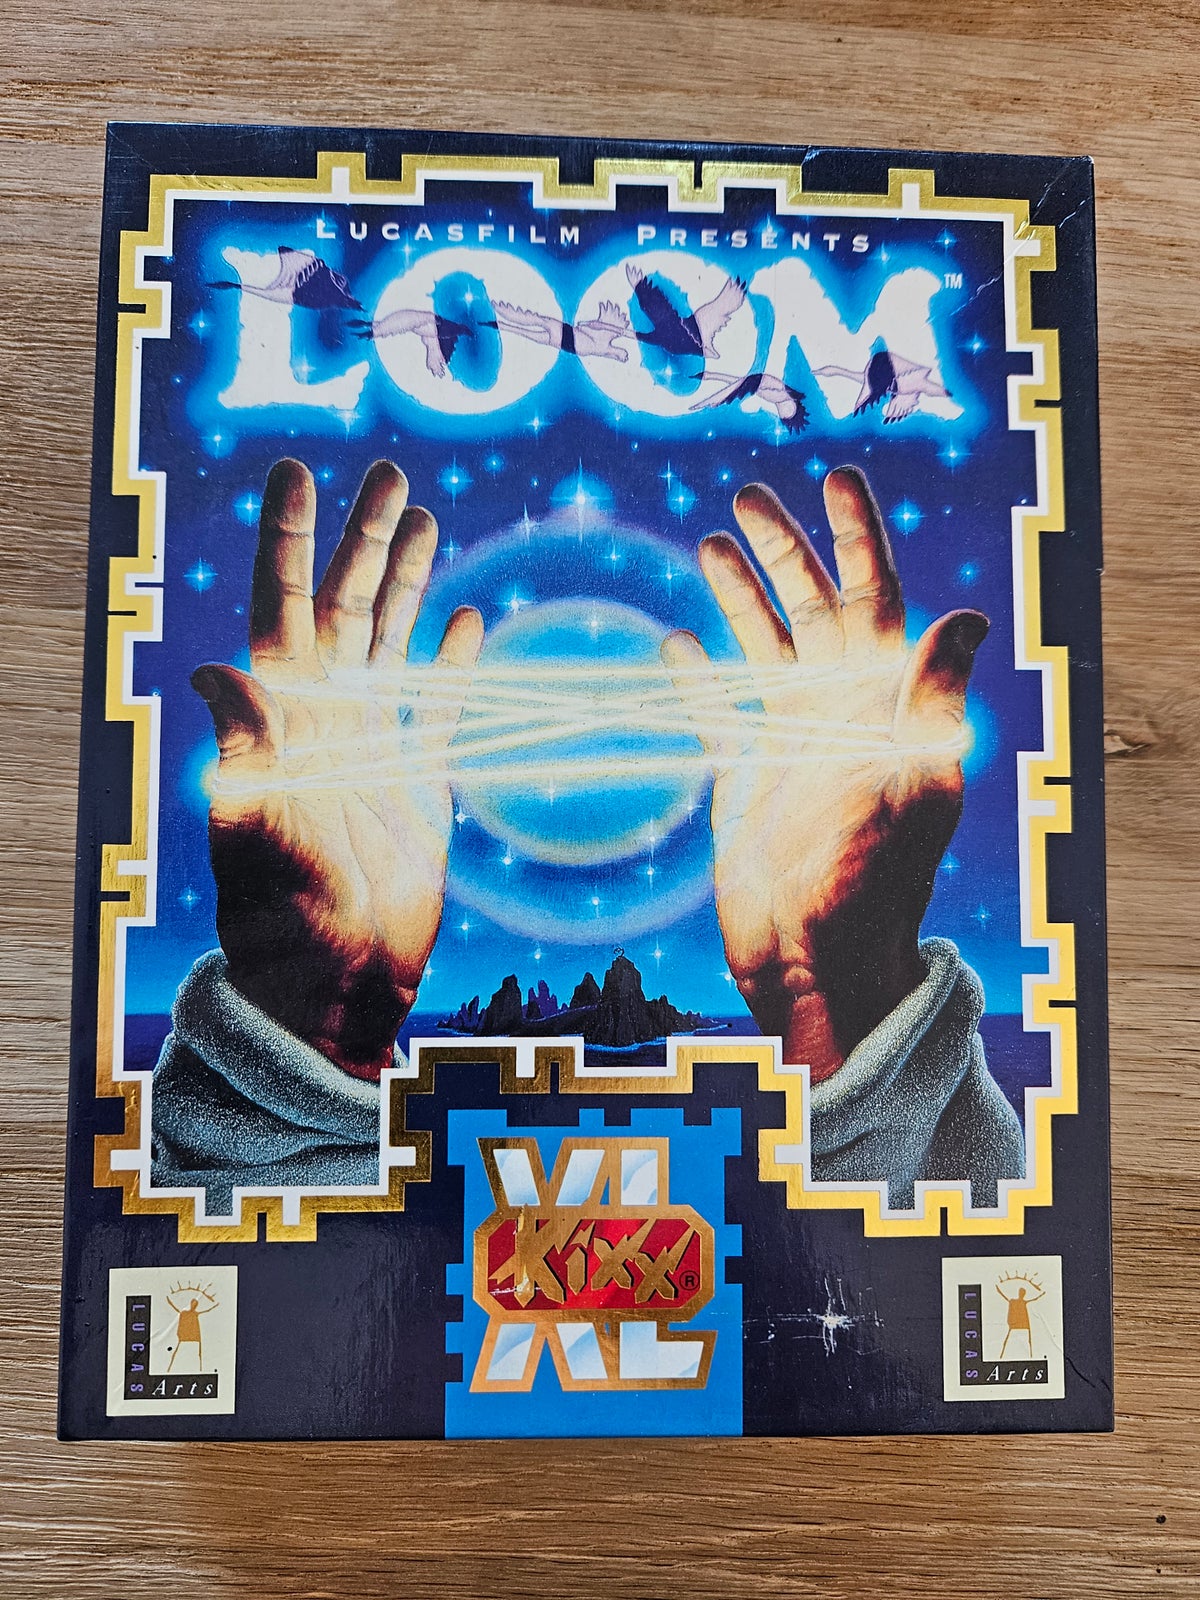 LOOM, Amiga 500 og opefter